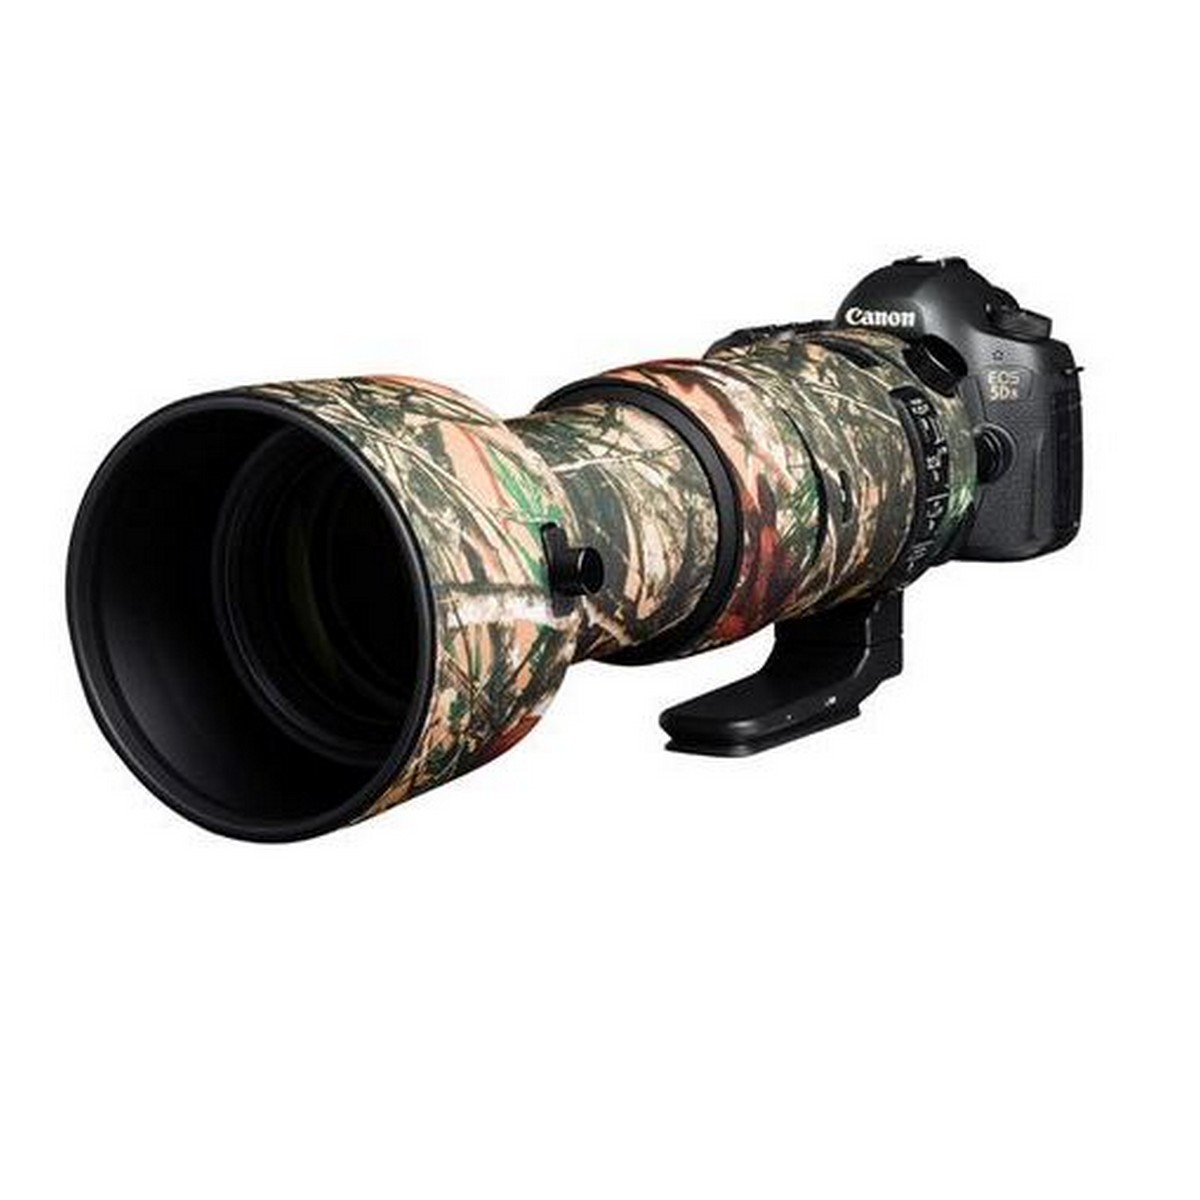 Easycover Lens Oak Objektivschutz für Sigma 60-600 mm 1:4,5-6,3 DG OS HSM Sport Wald Camouflage